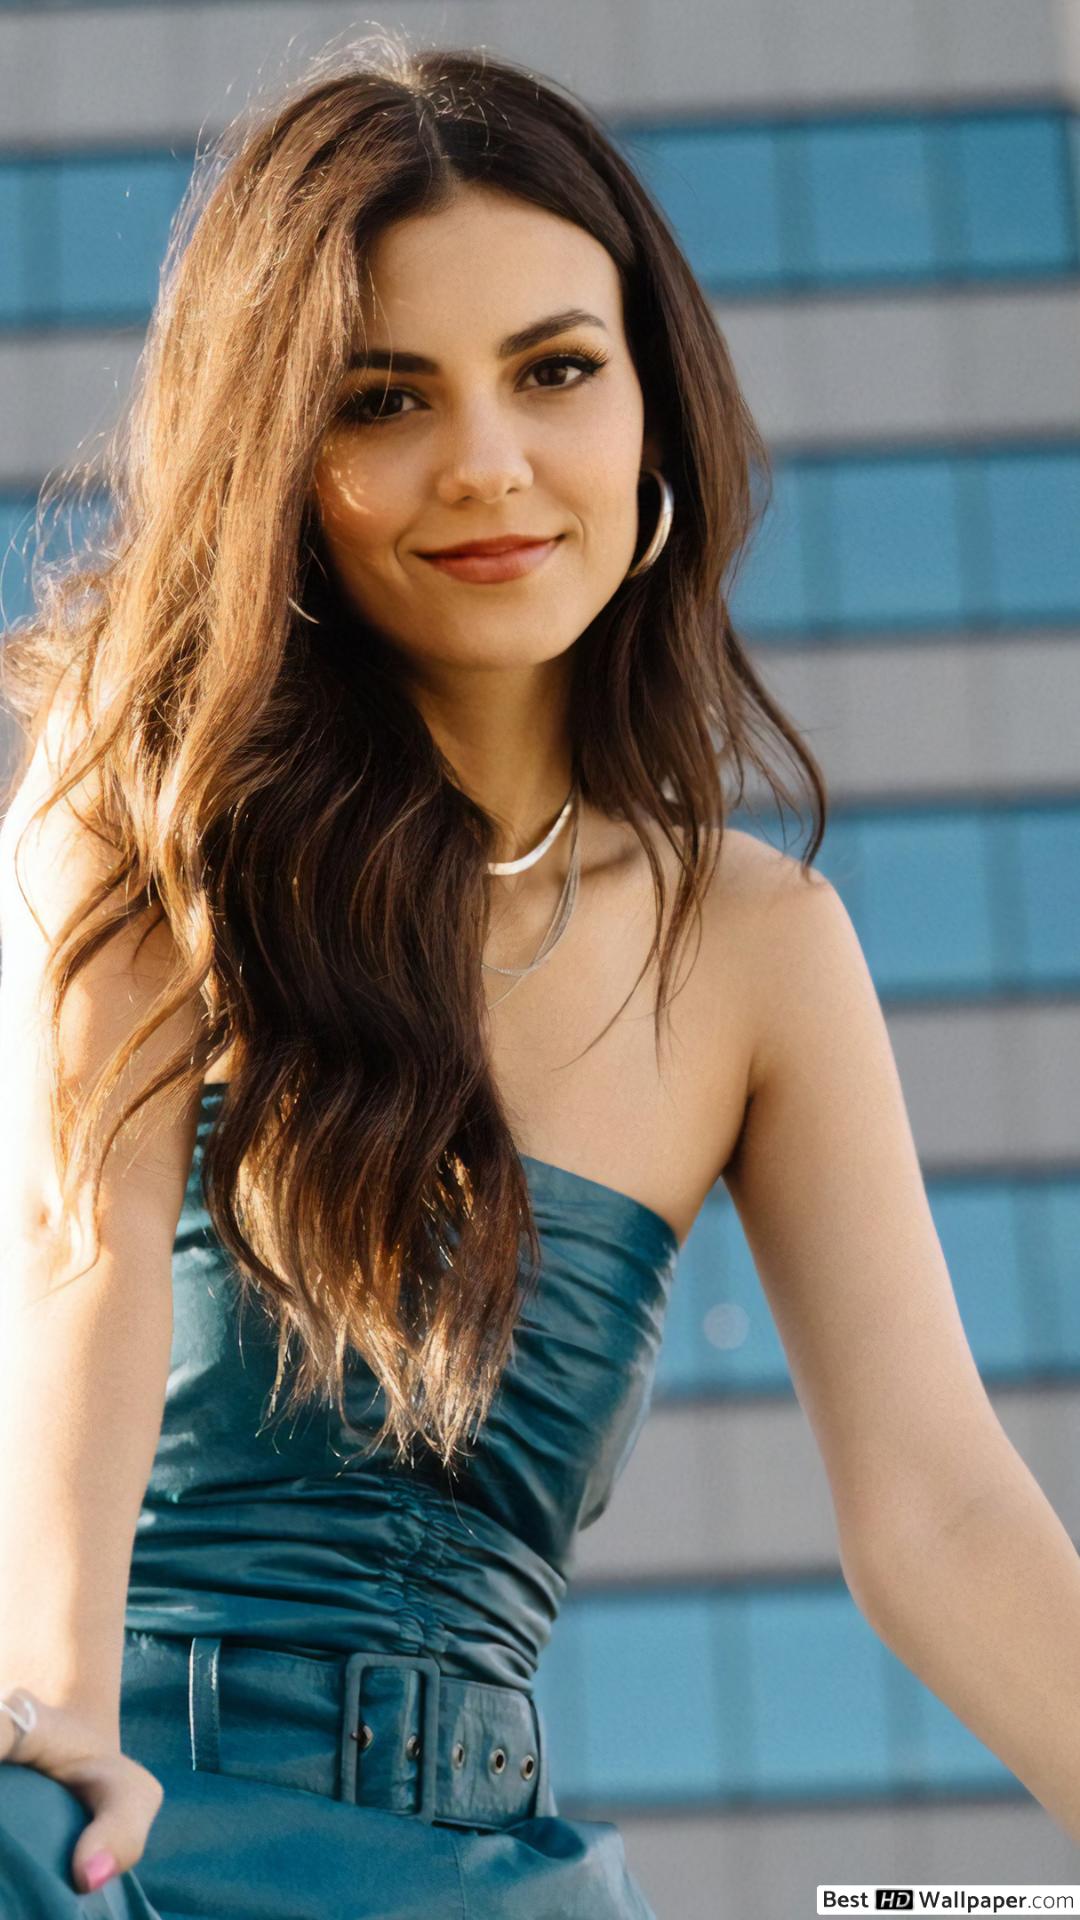 Singer Actress Victoria Justice HD Wallpaper Download